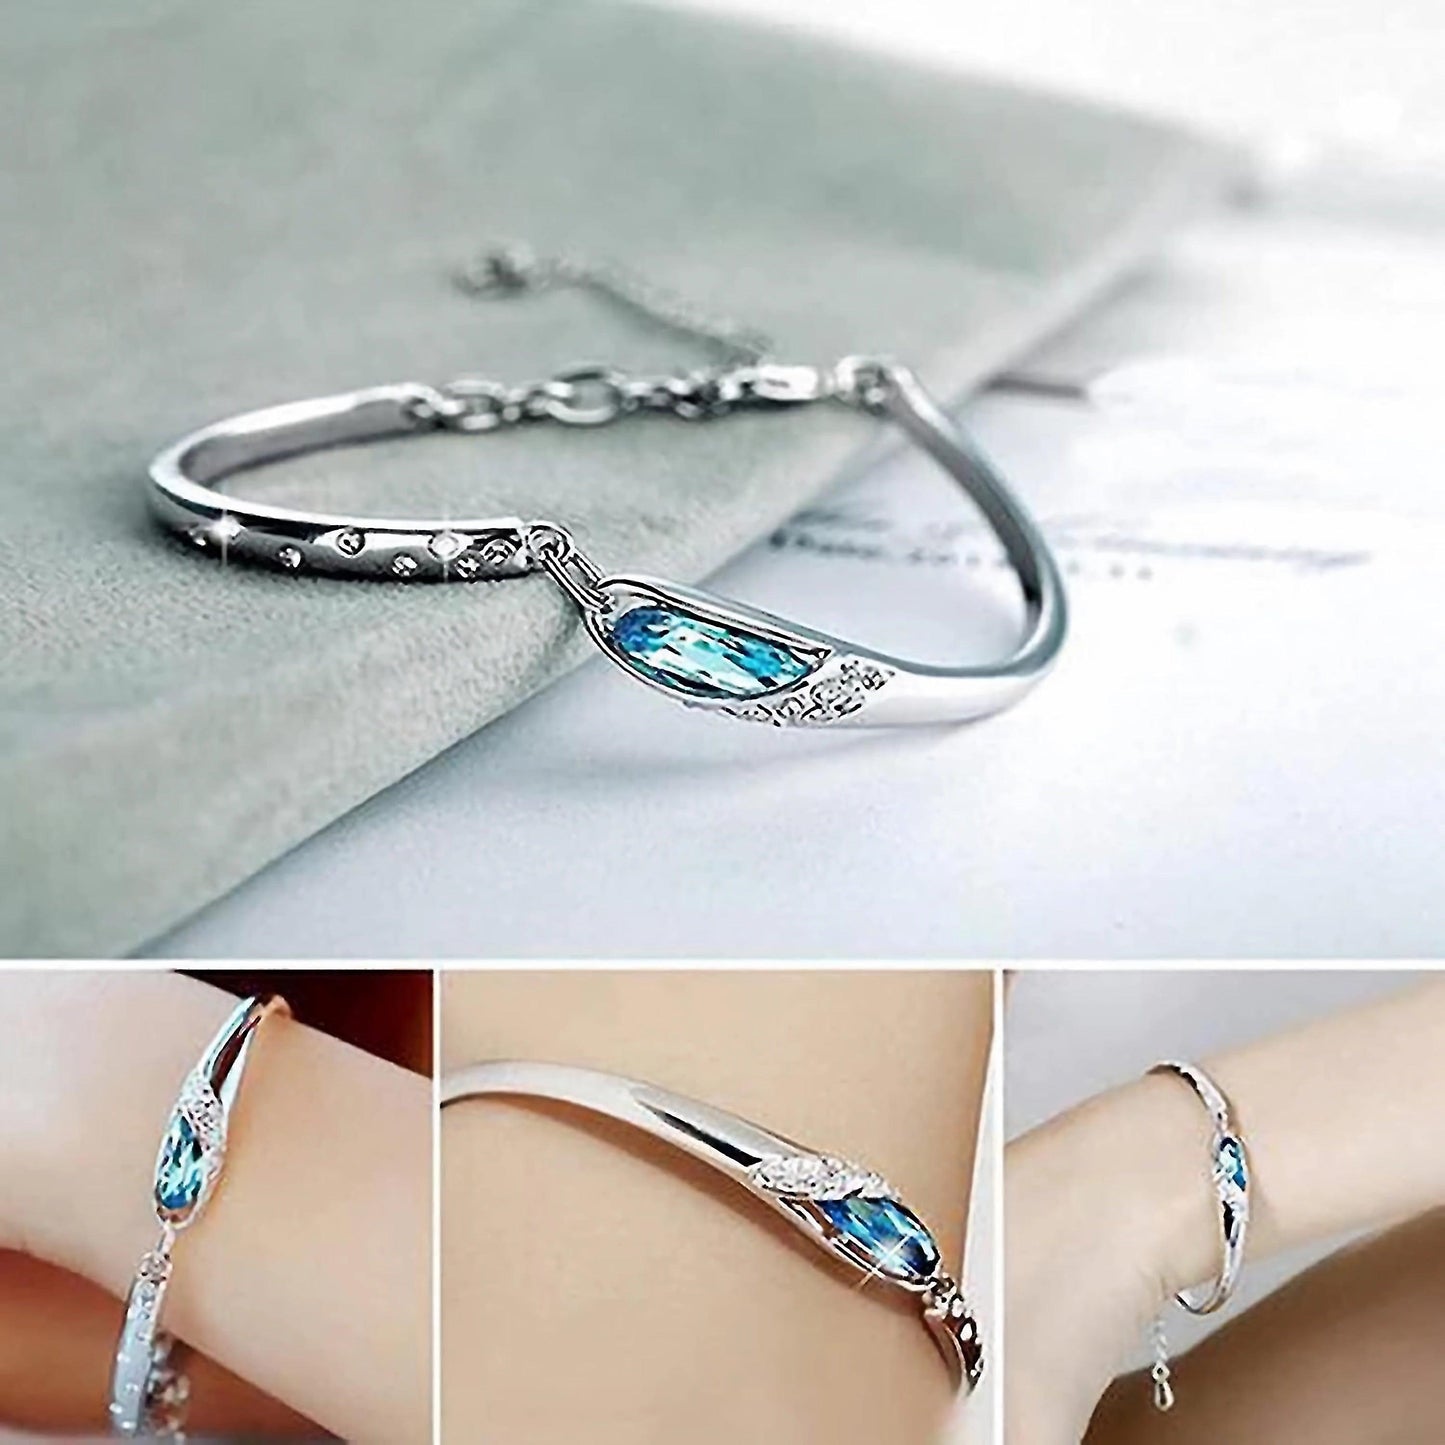 Crystal Azure Allure Bracelet - Fabric of Cultures